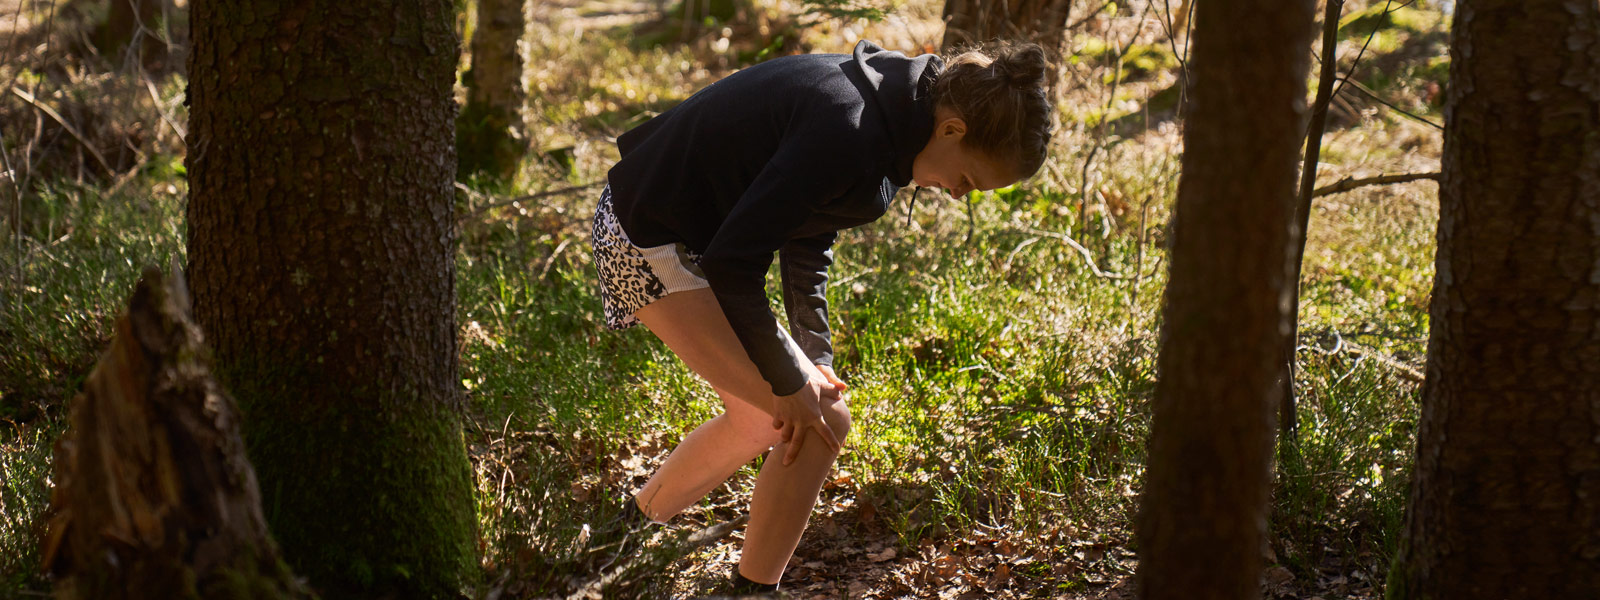 Breaker in dark hoodie grabs her knee standing in the forest between trees